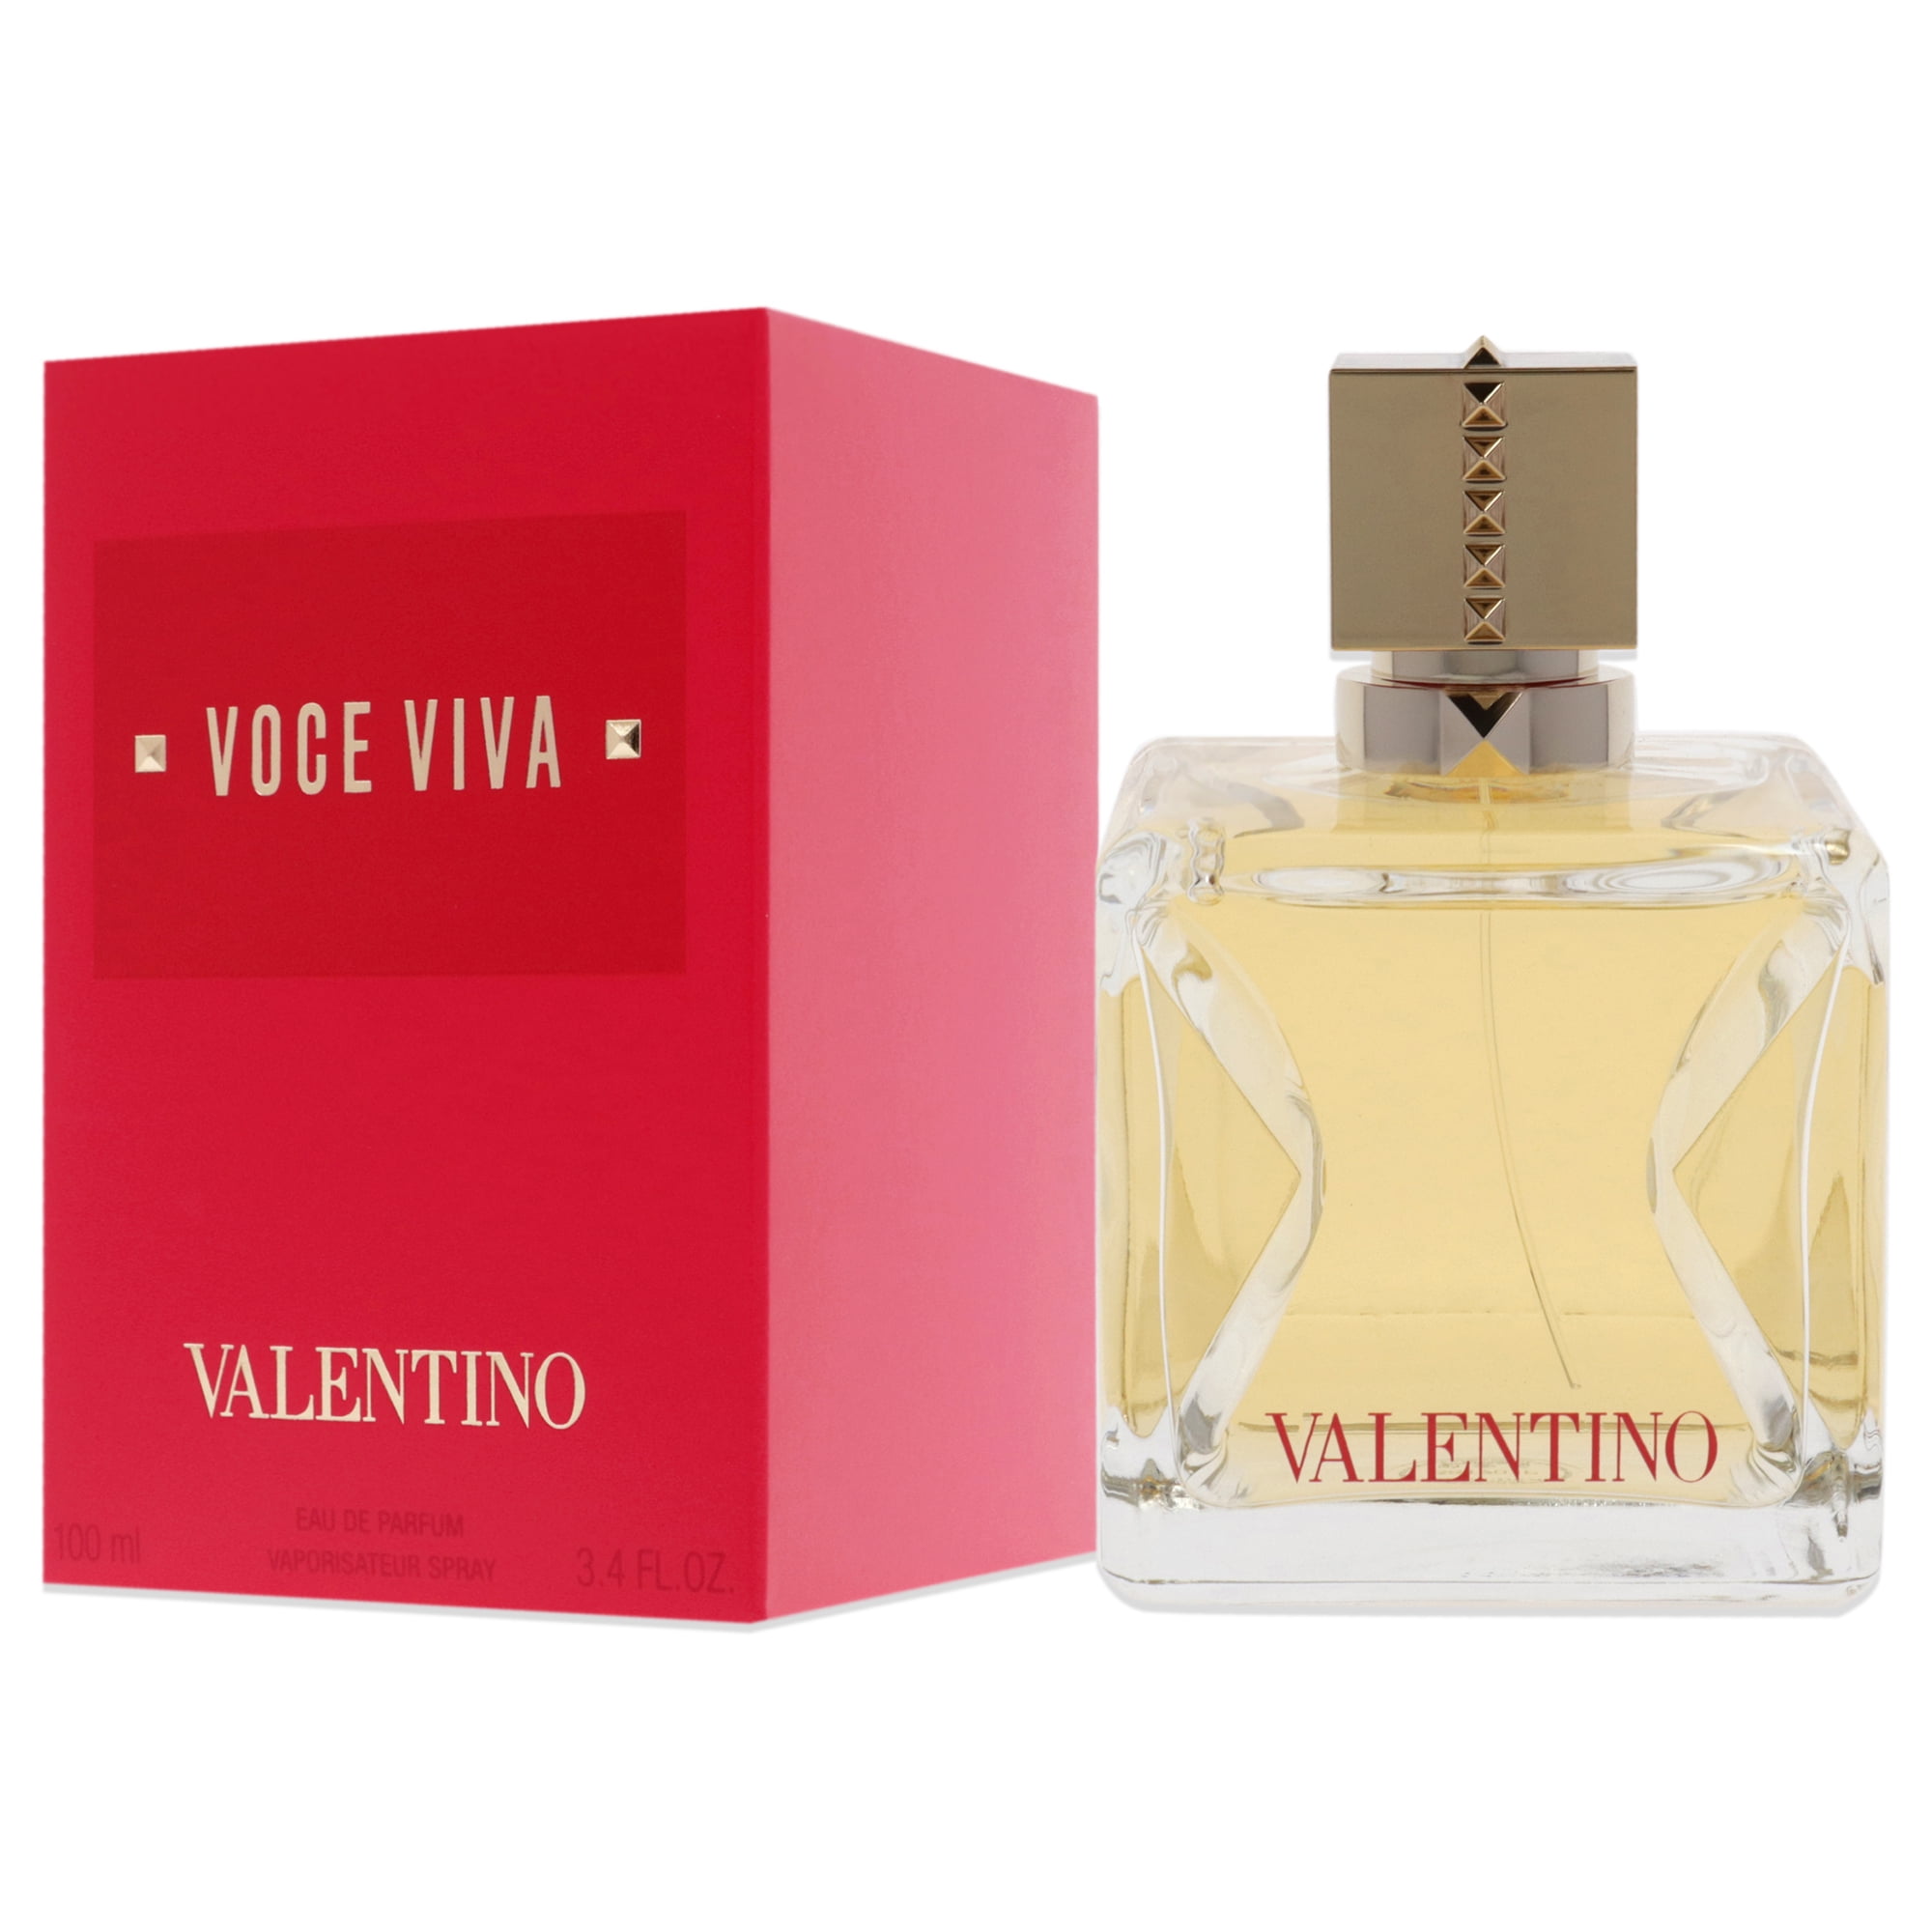 Voce Viva Valentino for women 3.4 oz